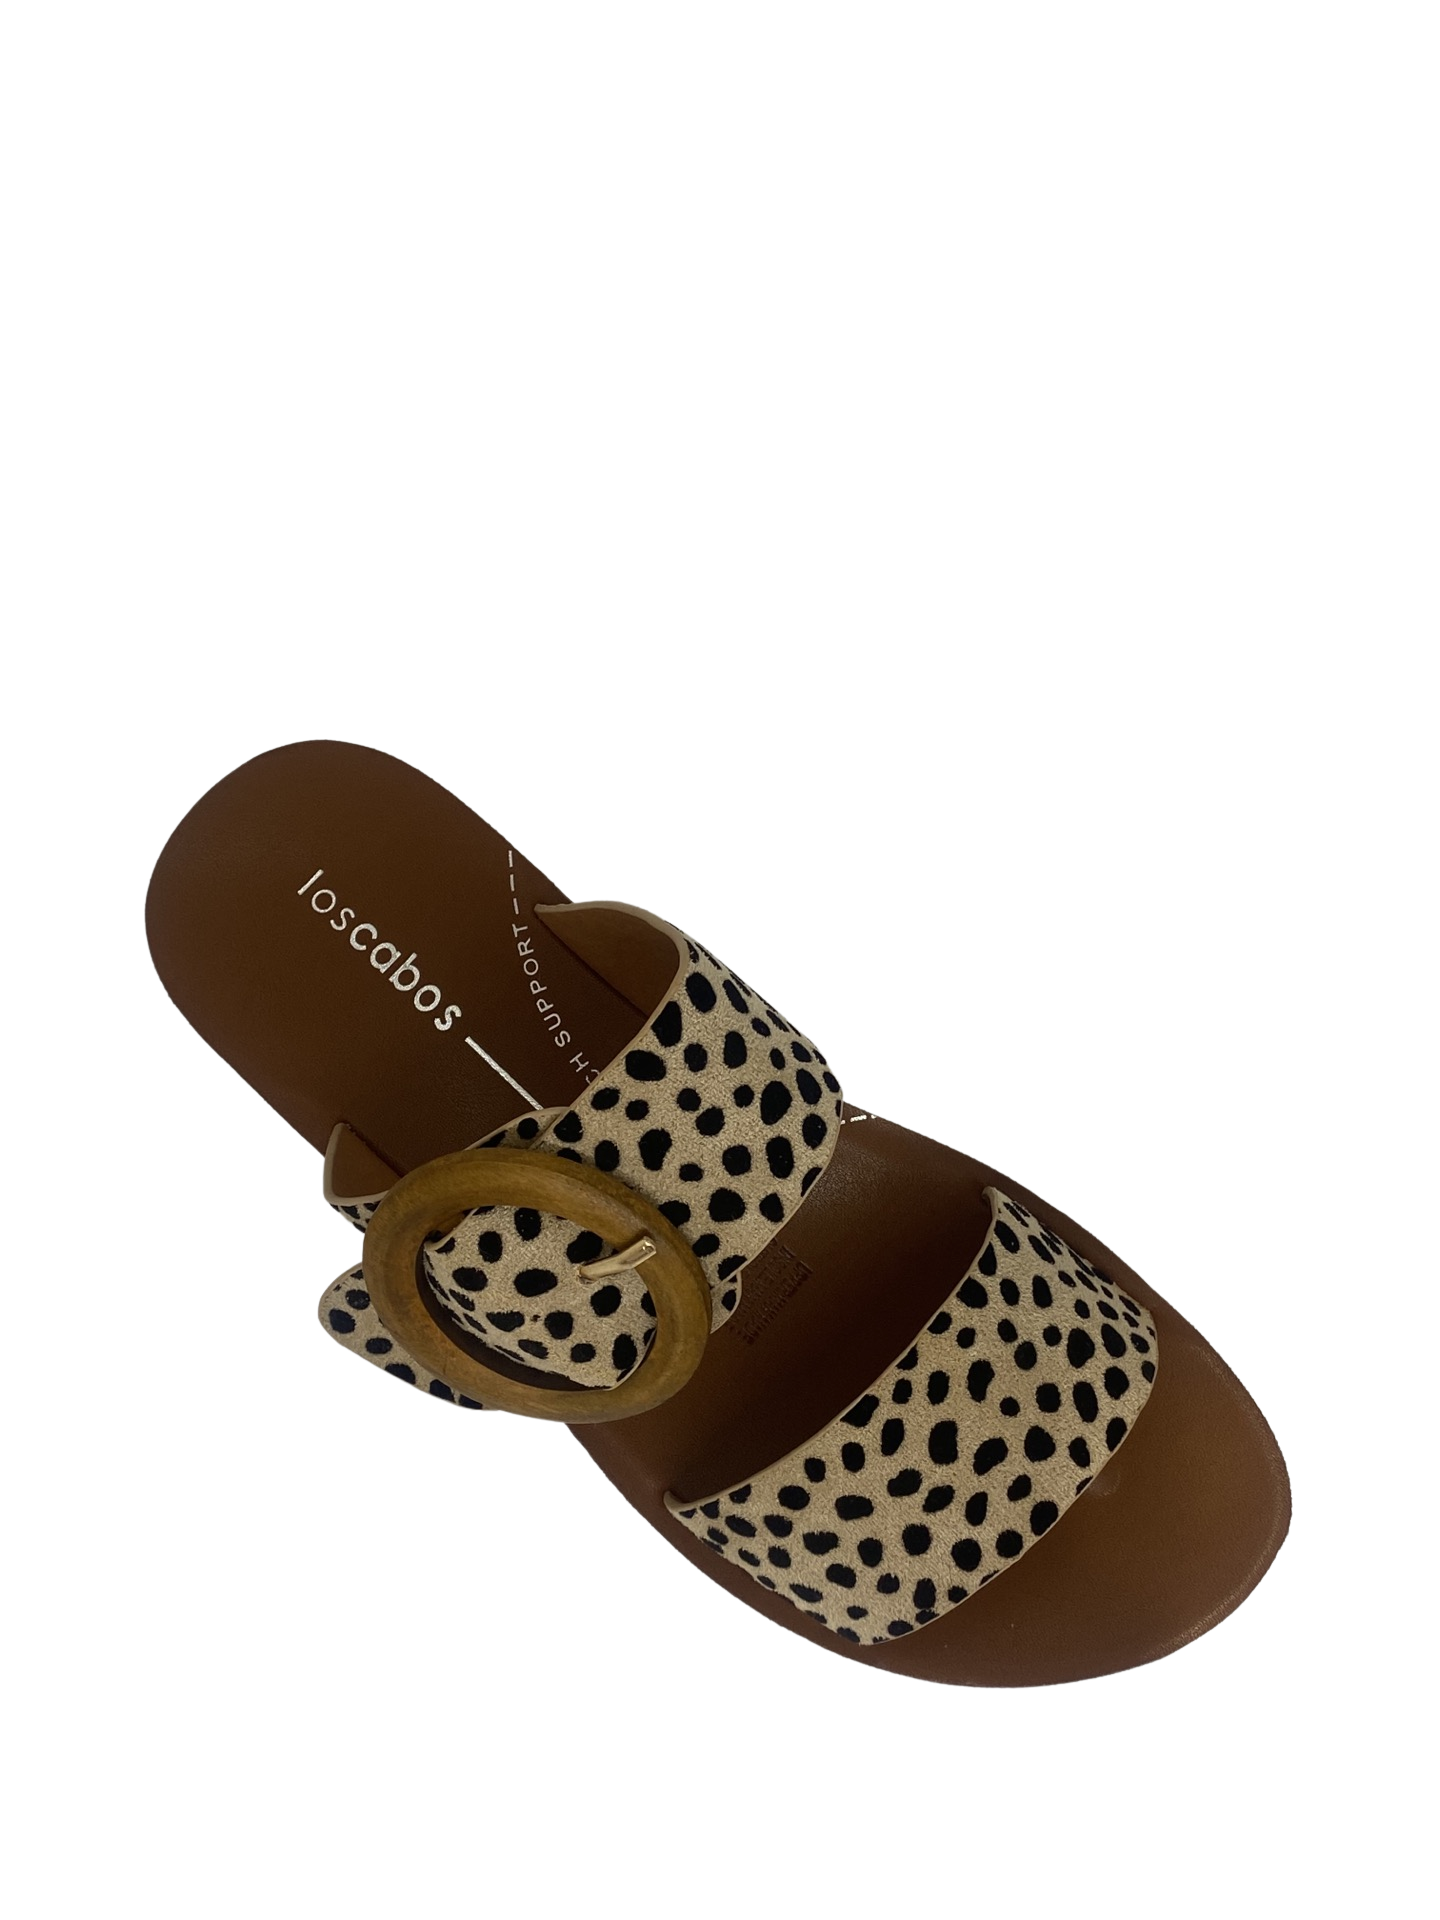 Damani Sandal - Cheetah